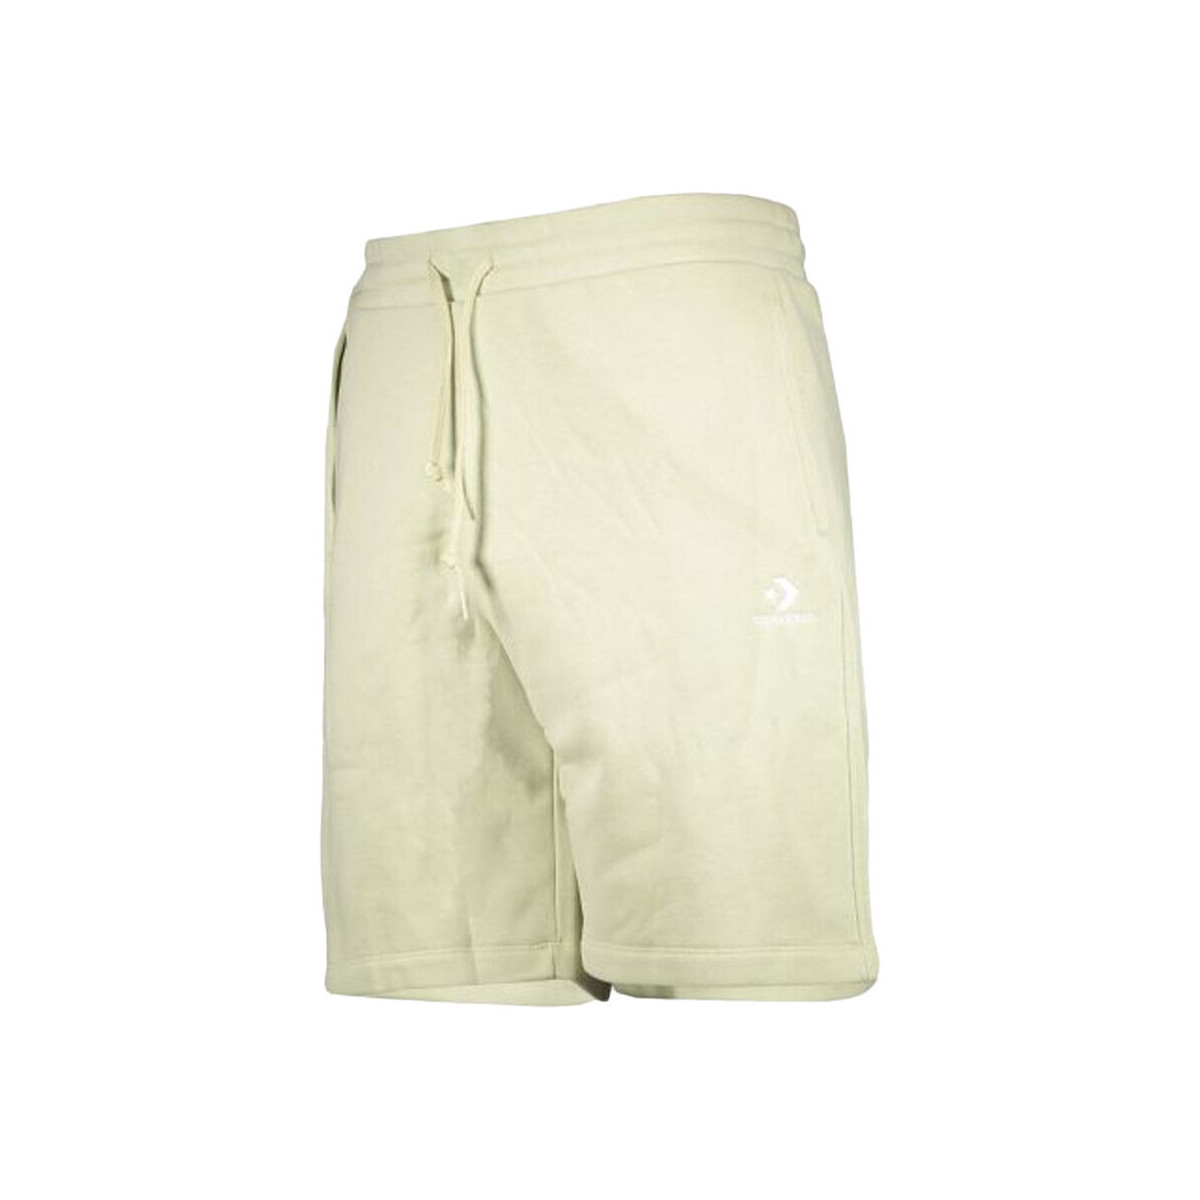 Kleidung Herren Shorts / Bermudas Converse 10020349-A13 Grün